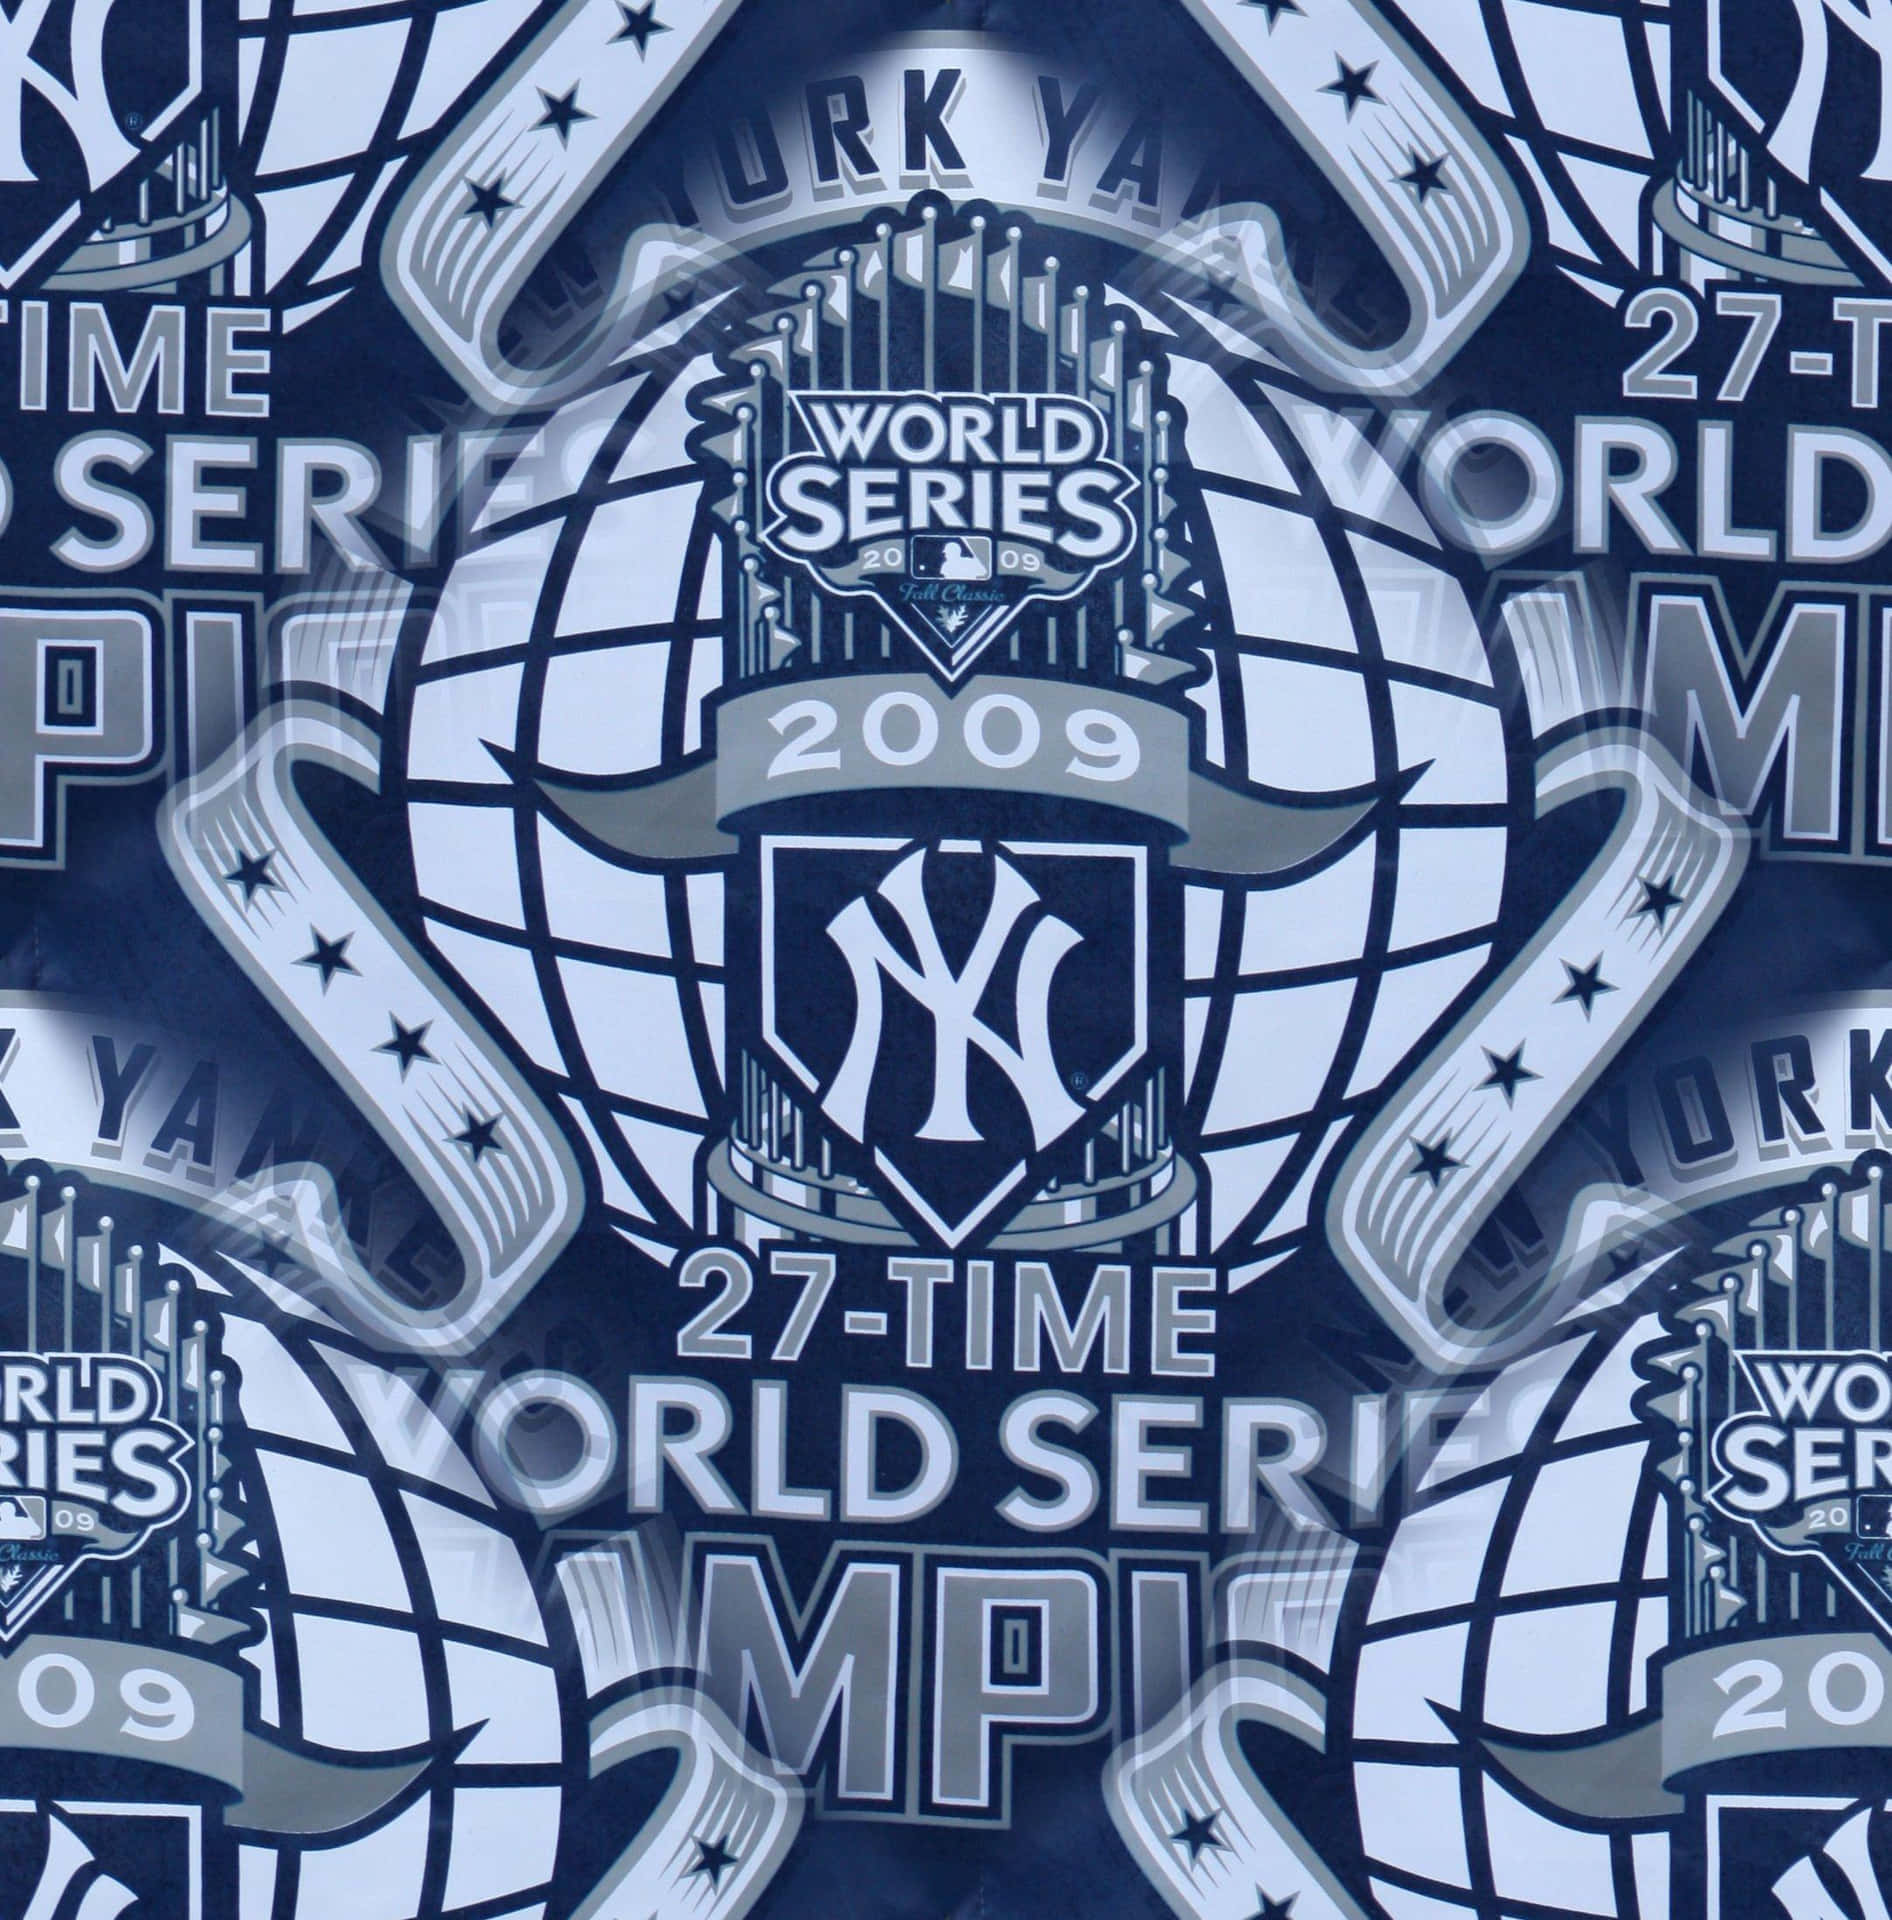 Majestic Art Of The Historic Yankee Stadium, Home Of The New York Yankees